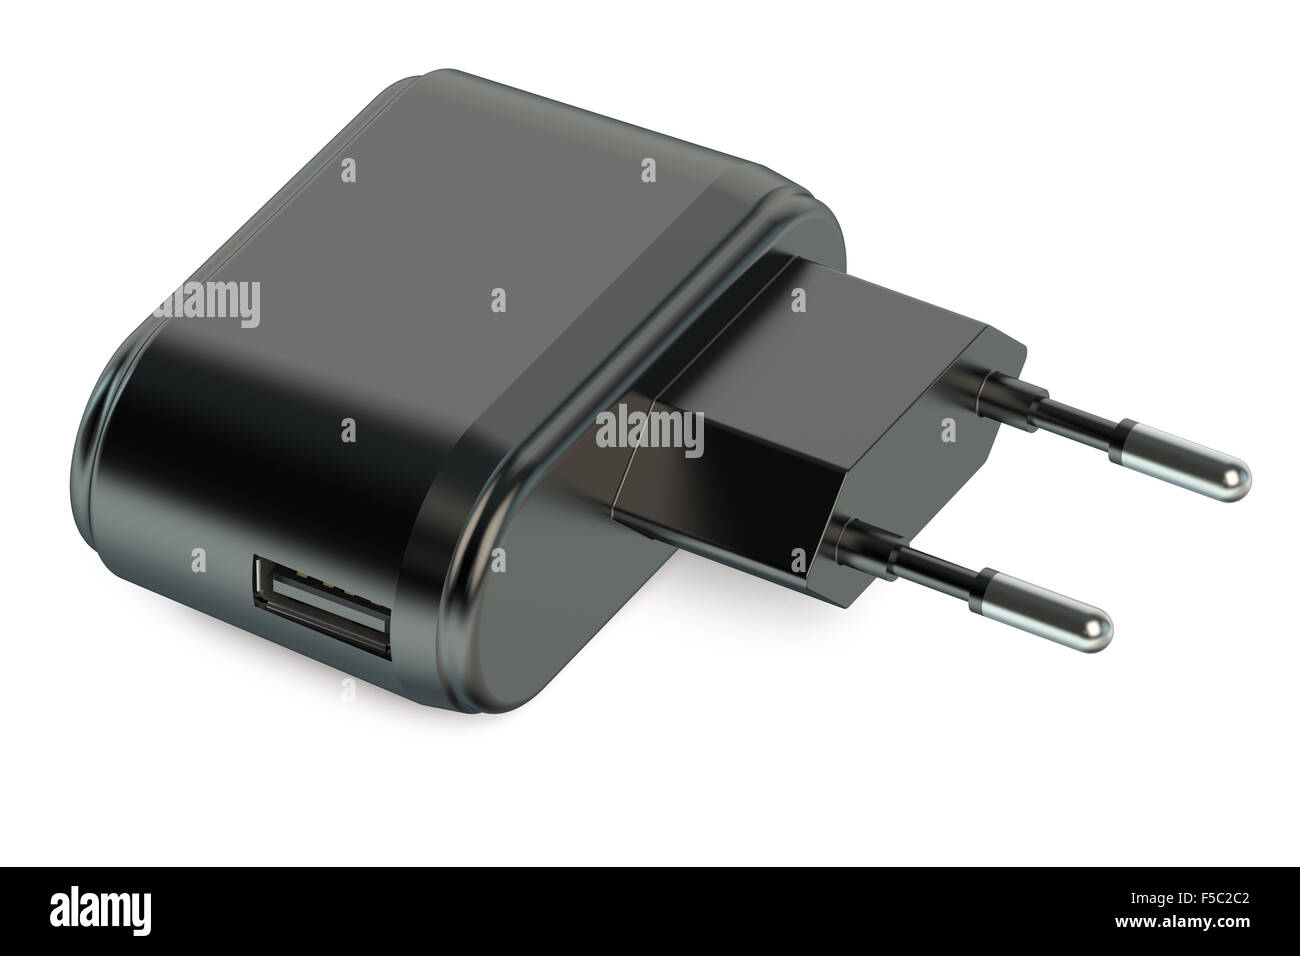 USB Phone Charger isolati su sfondo bianco Foto Stock